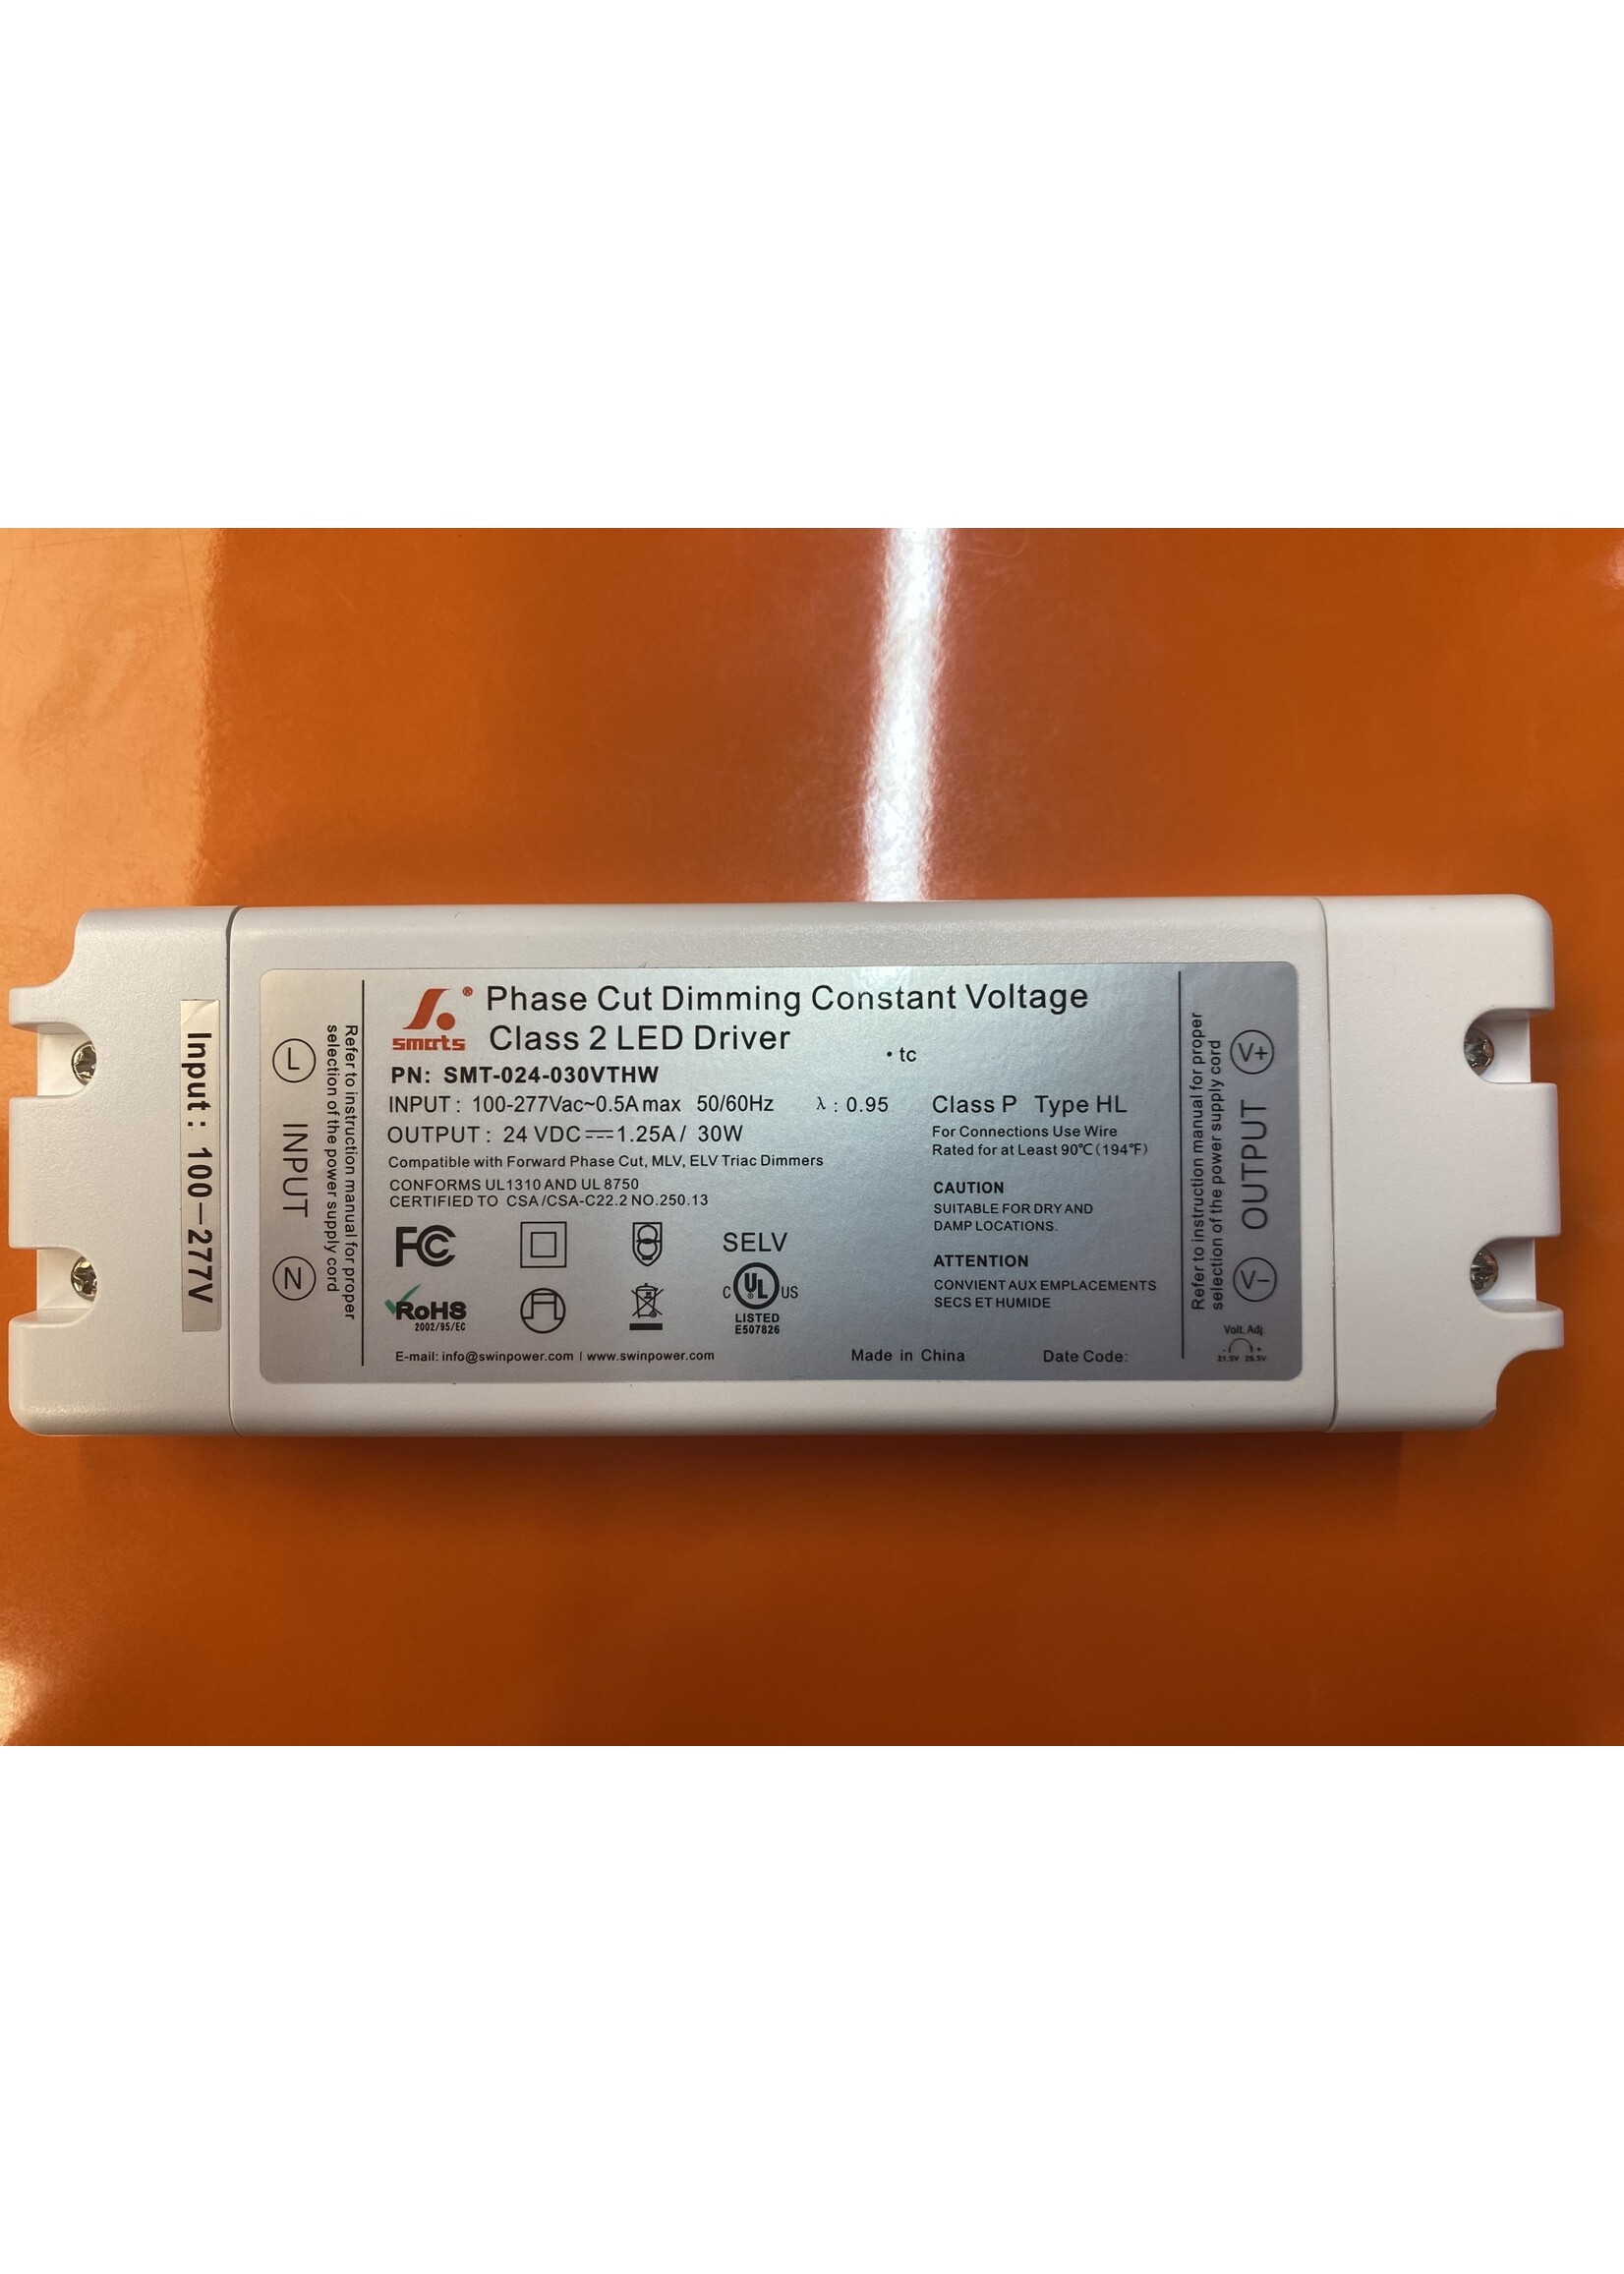 SMARTS ELECTRONIC SMT-024-030VTHW 277VAC Triac dimmable constant voltage LED driver Input voltage: 100-277VAC 47-63HZ Output: 24VDC @1.25A 30W